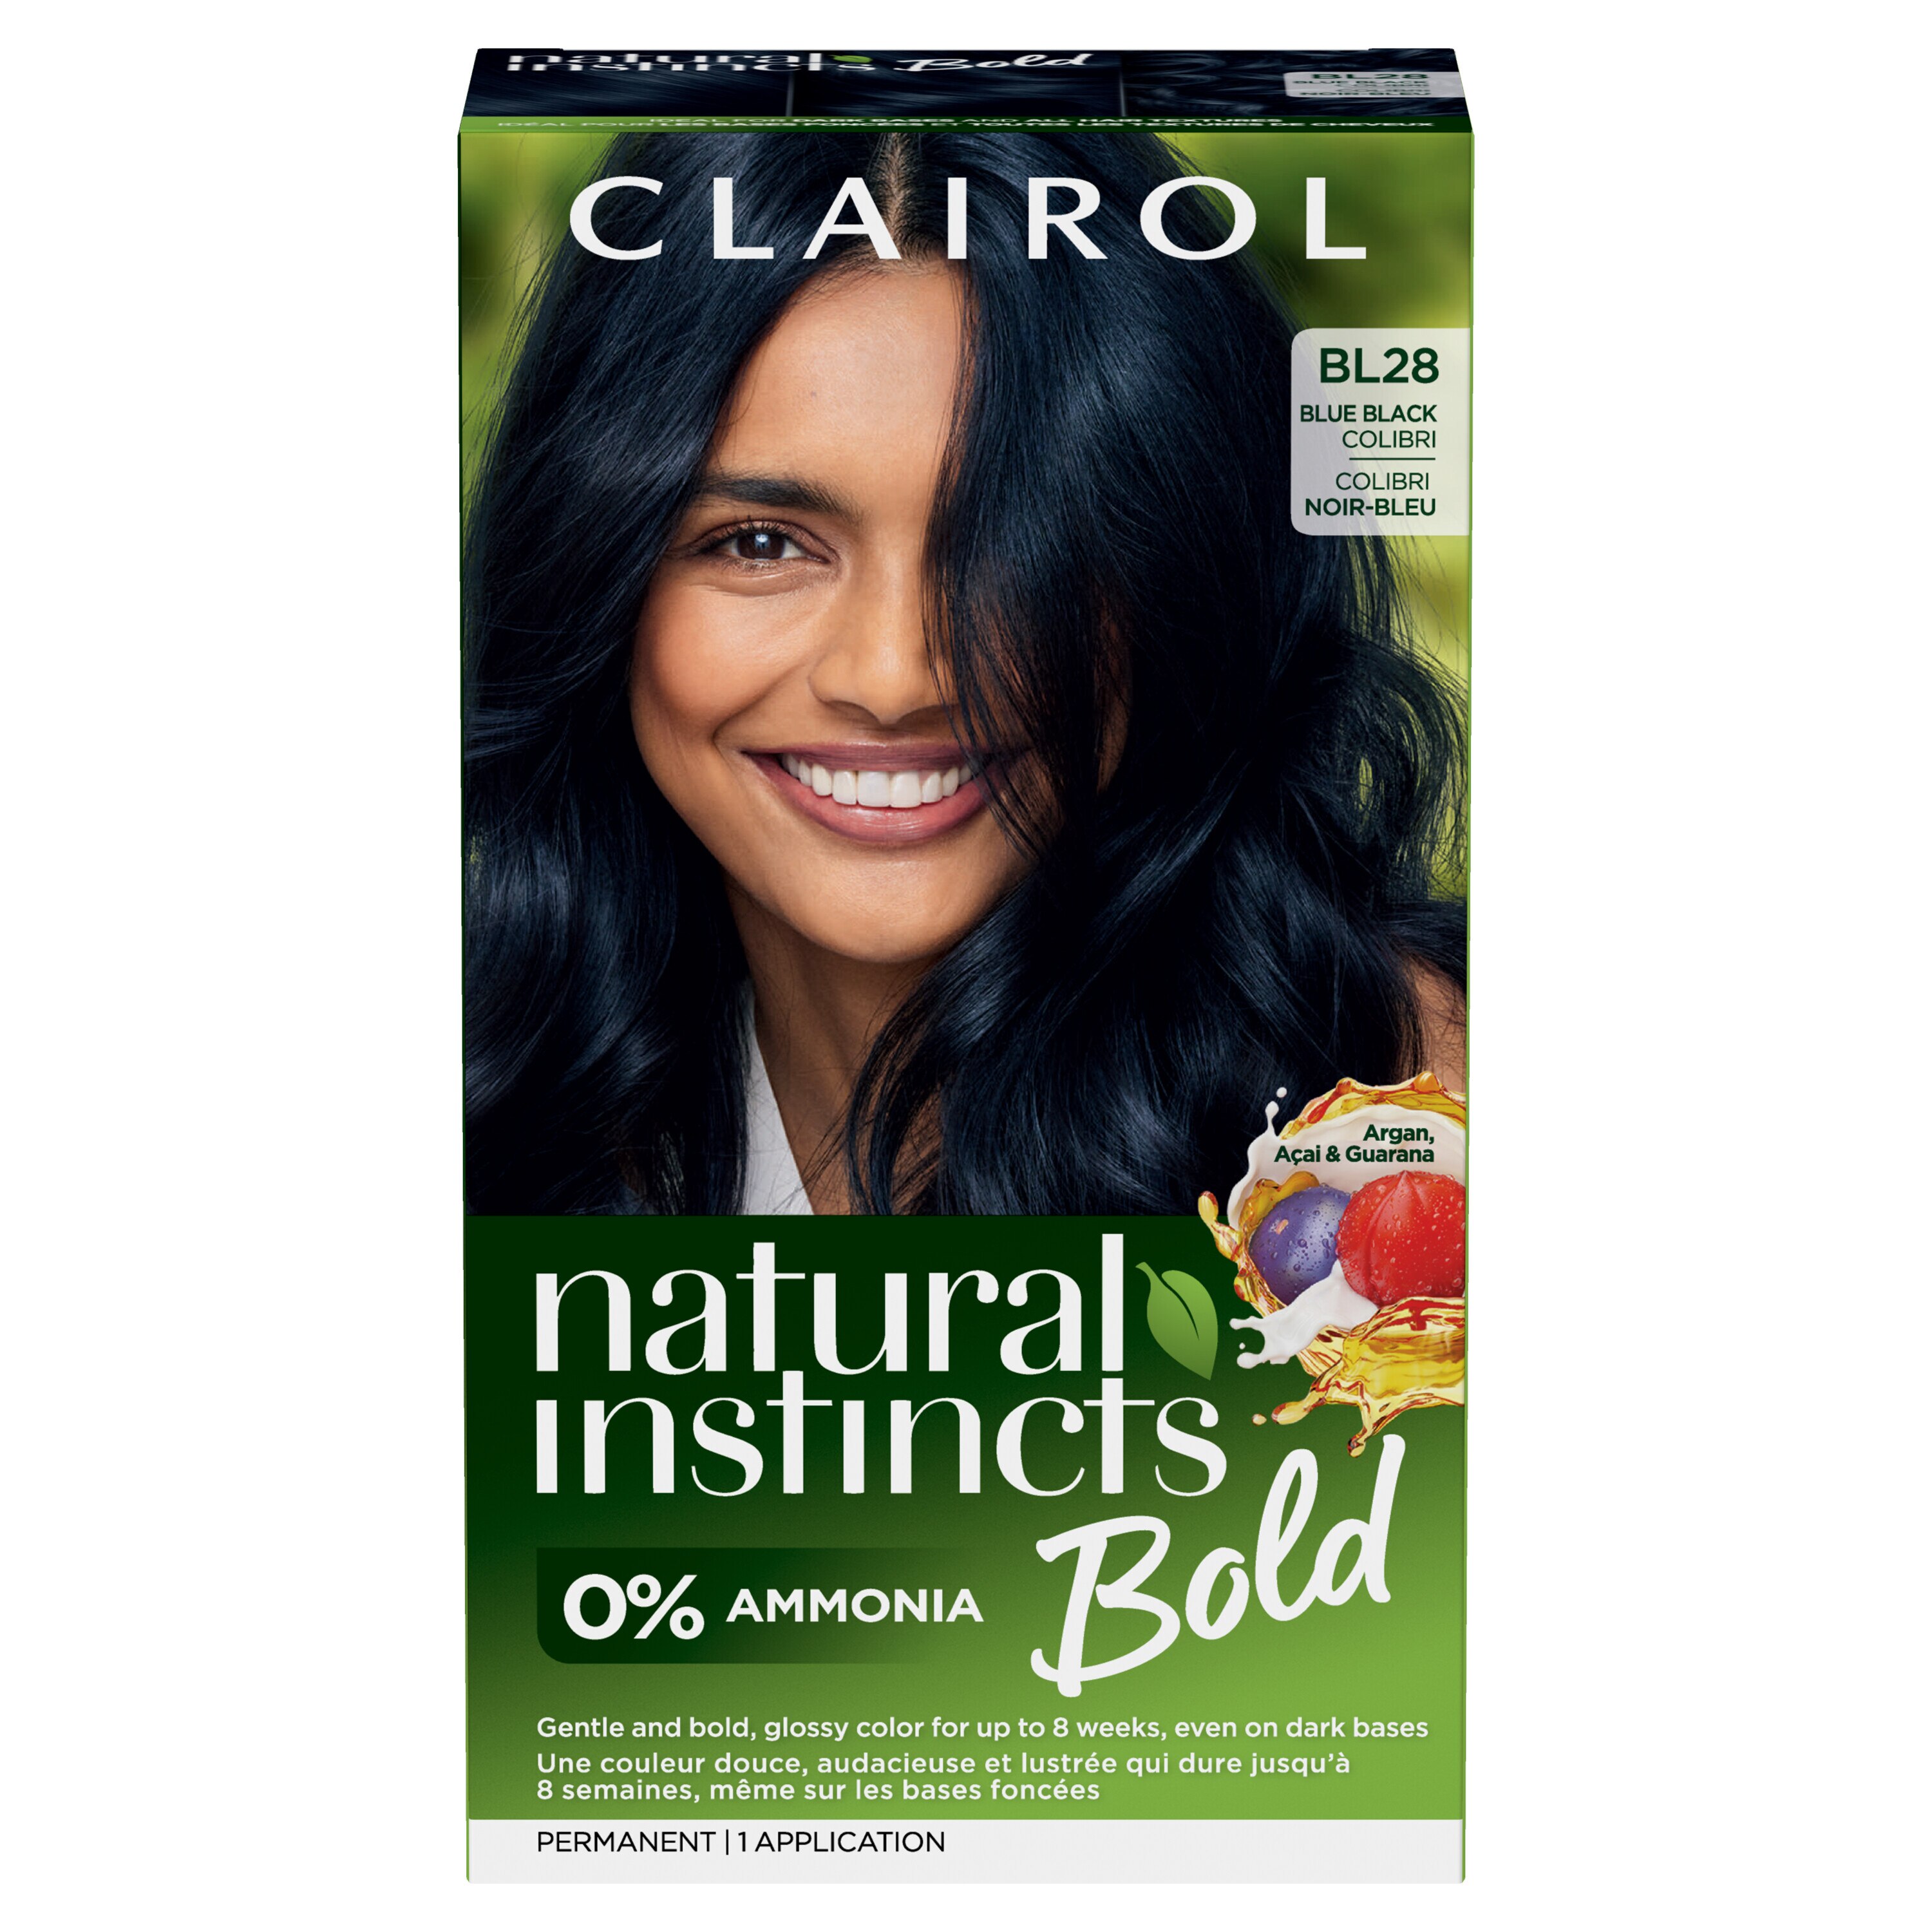 Clairol Natural Instincts Bold Permanent Hair Color, BL28 Blue Black Colibri , CVS